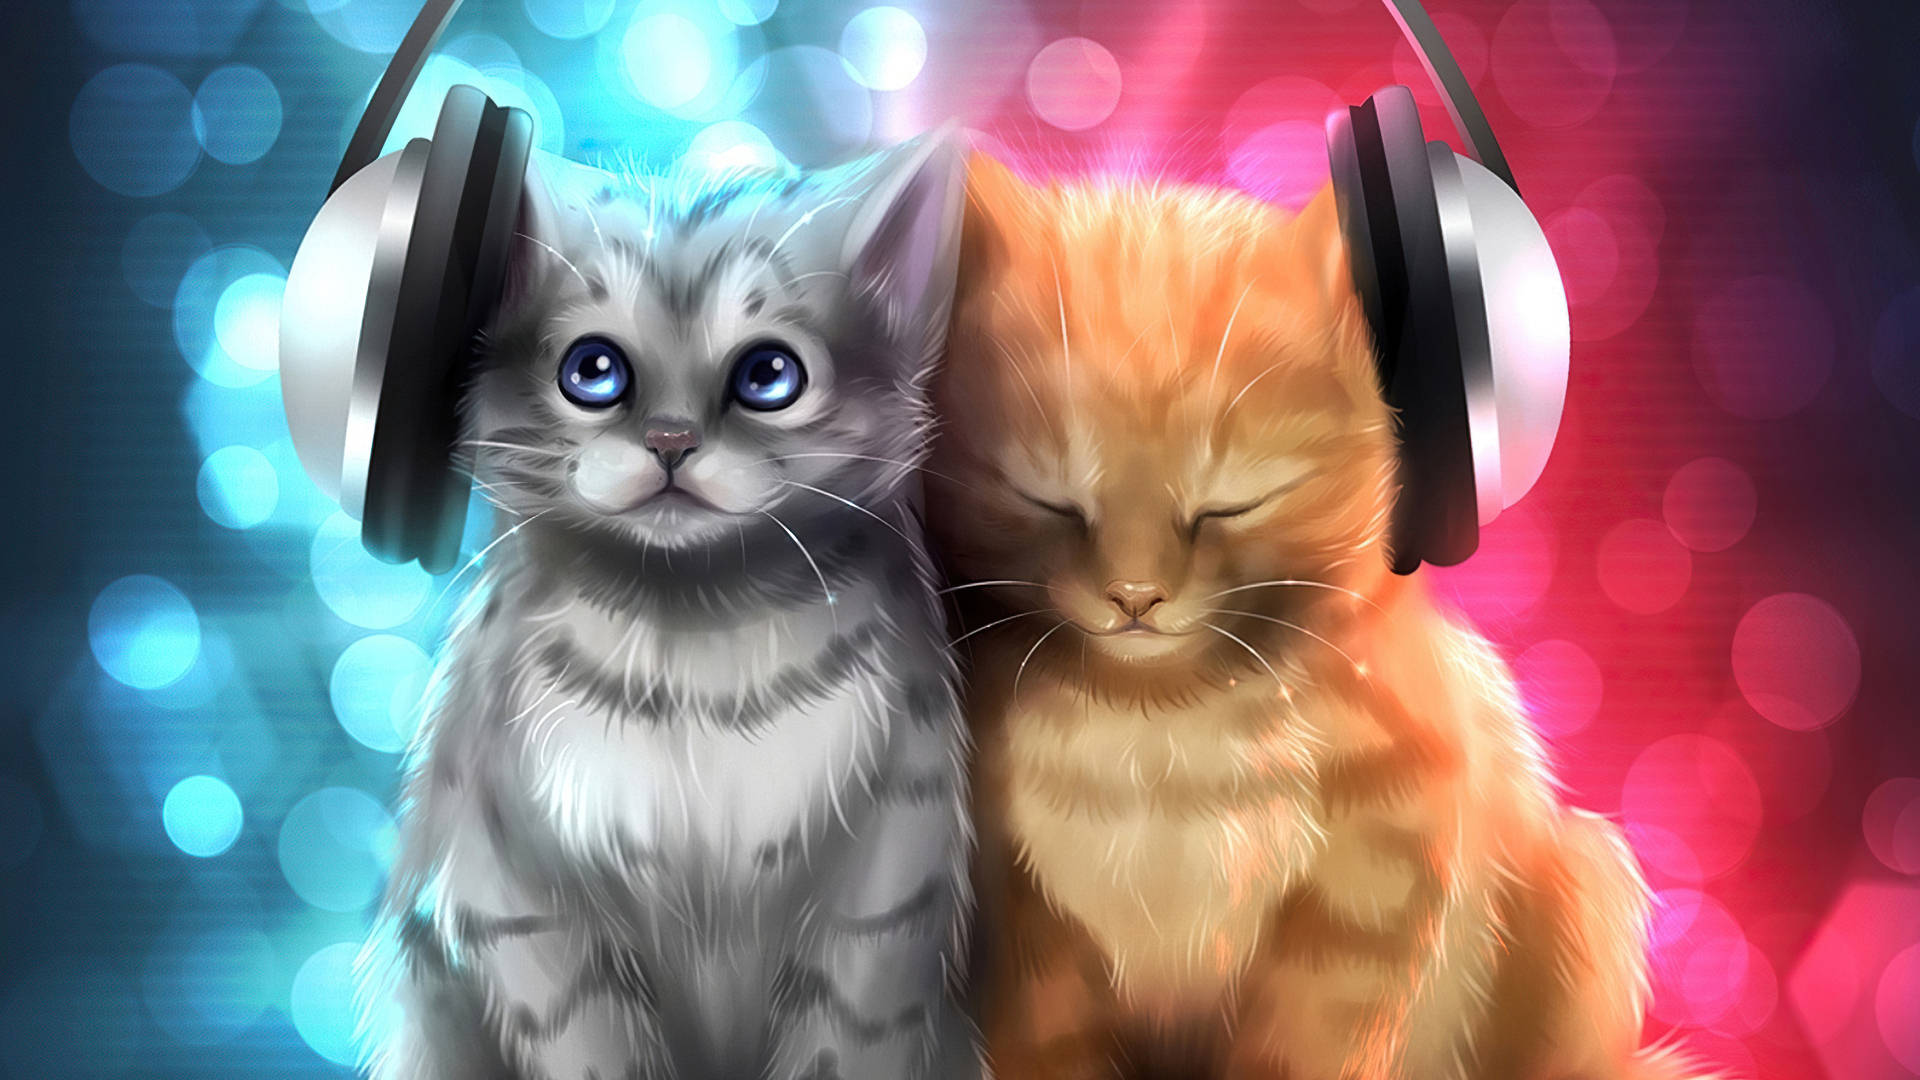 Aesthetic Cats With Headphones